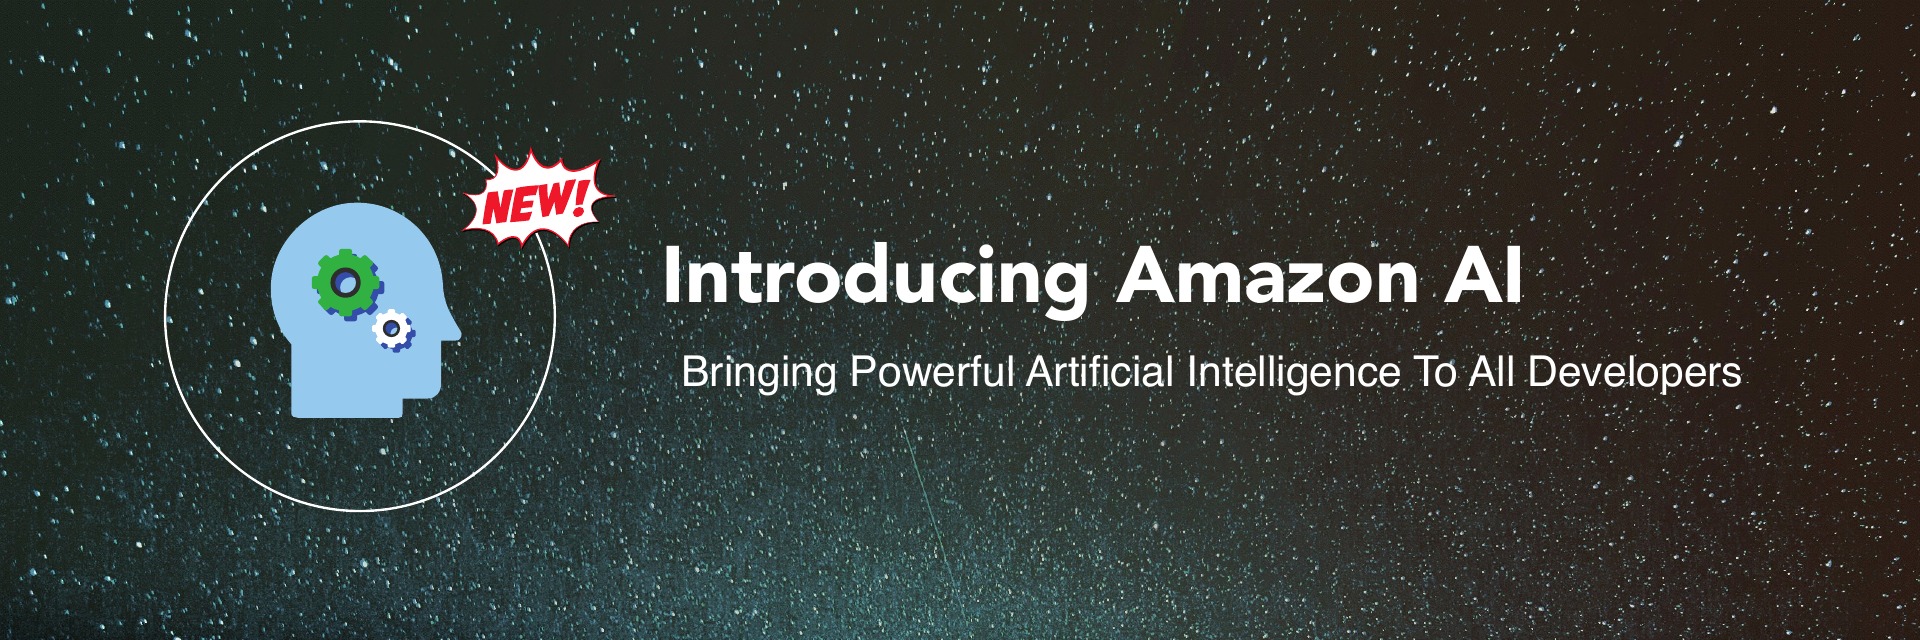 Amazon Announces Three New AI Services